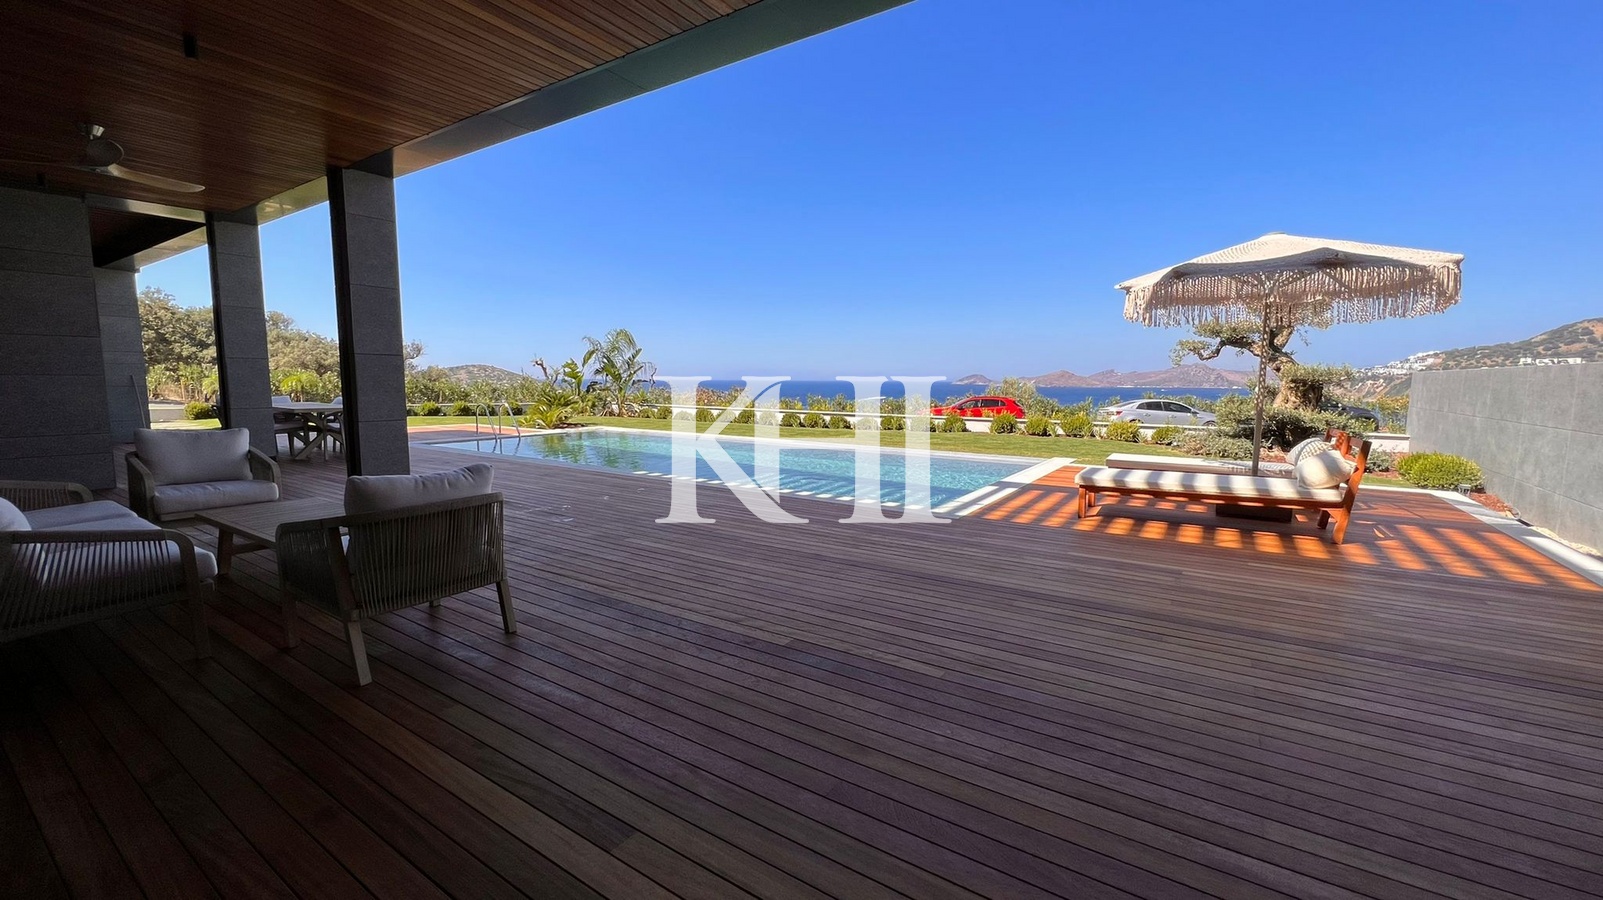 Under-Construction Luxury Villas Slide Image 4